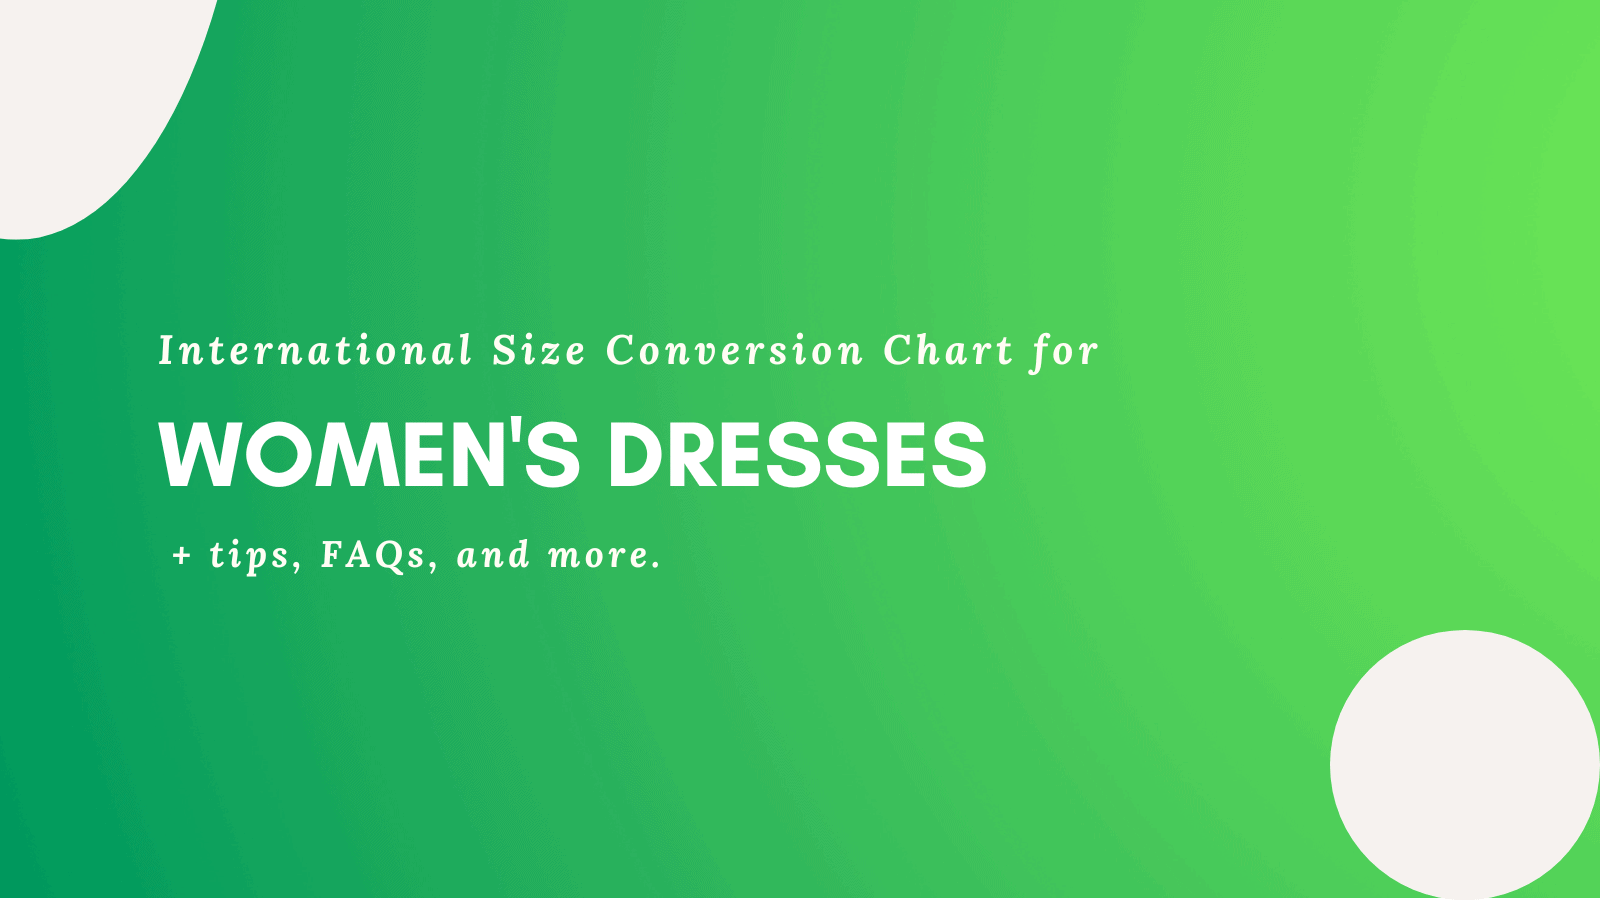 https://kiwisizing.com/wp-content/uploads/2023/02/International-Size-Conversion-Chart-for-Womens-dresses.png